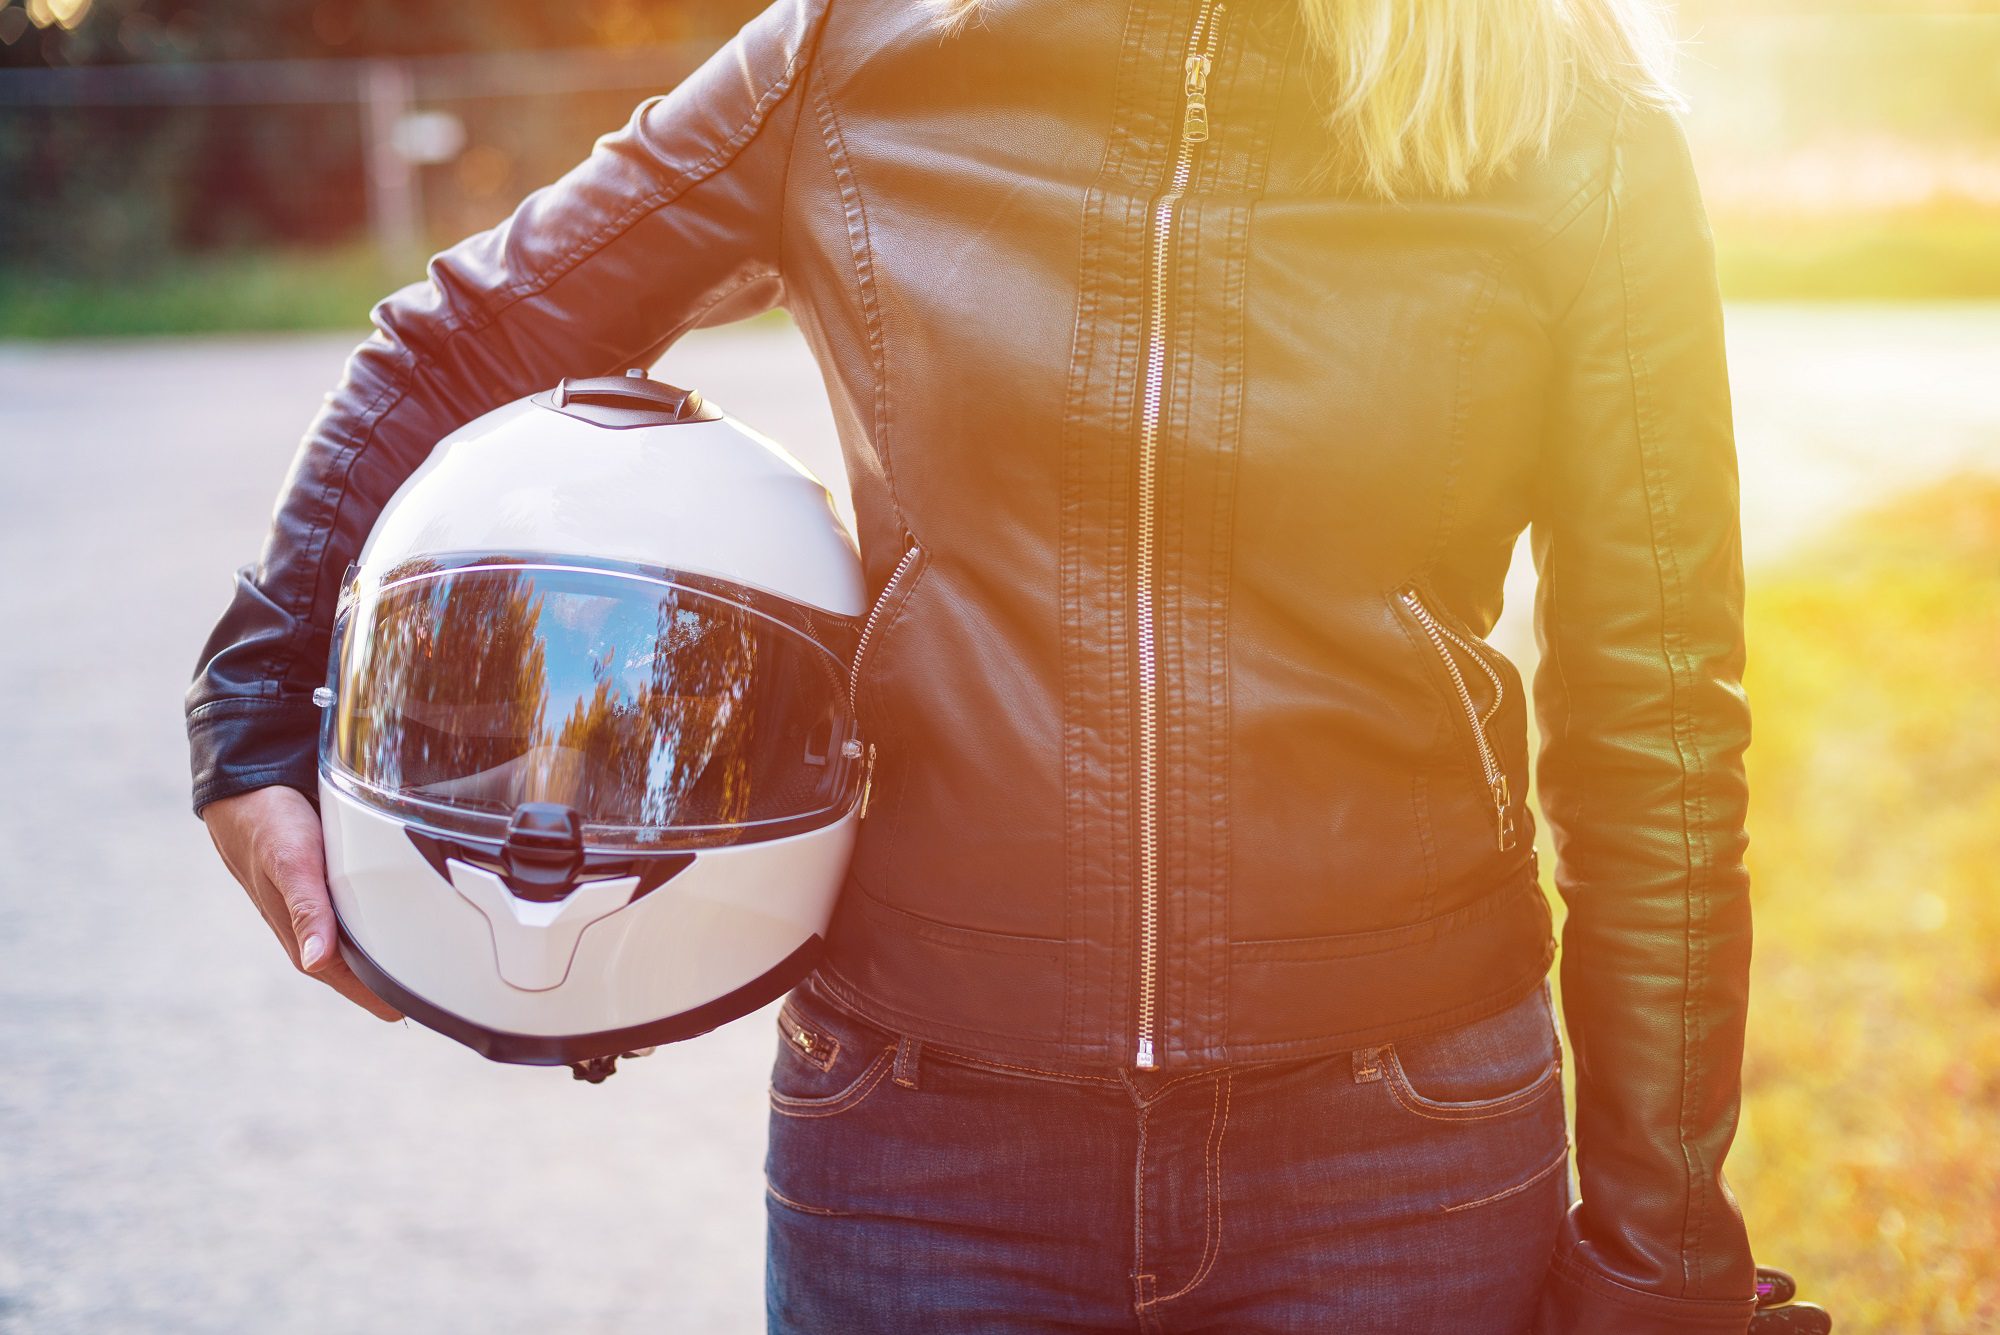 Woman in leather jacket holds motorcycle helmet